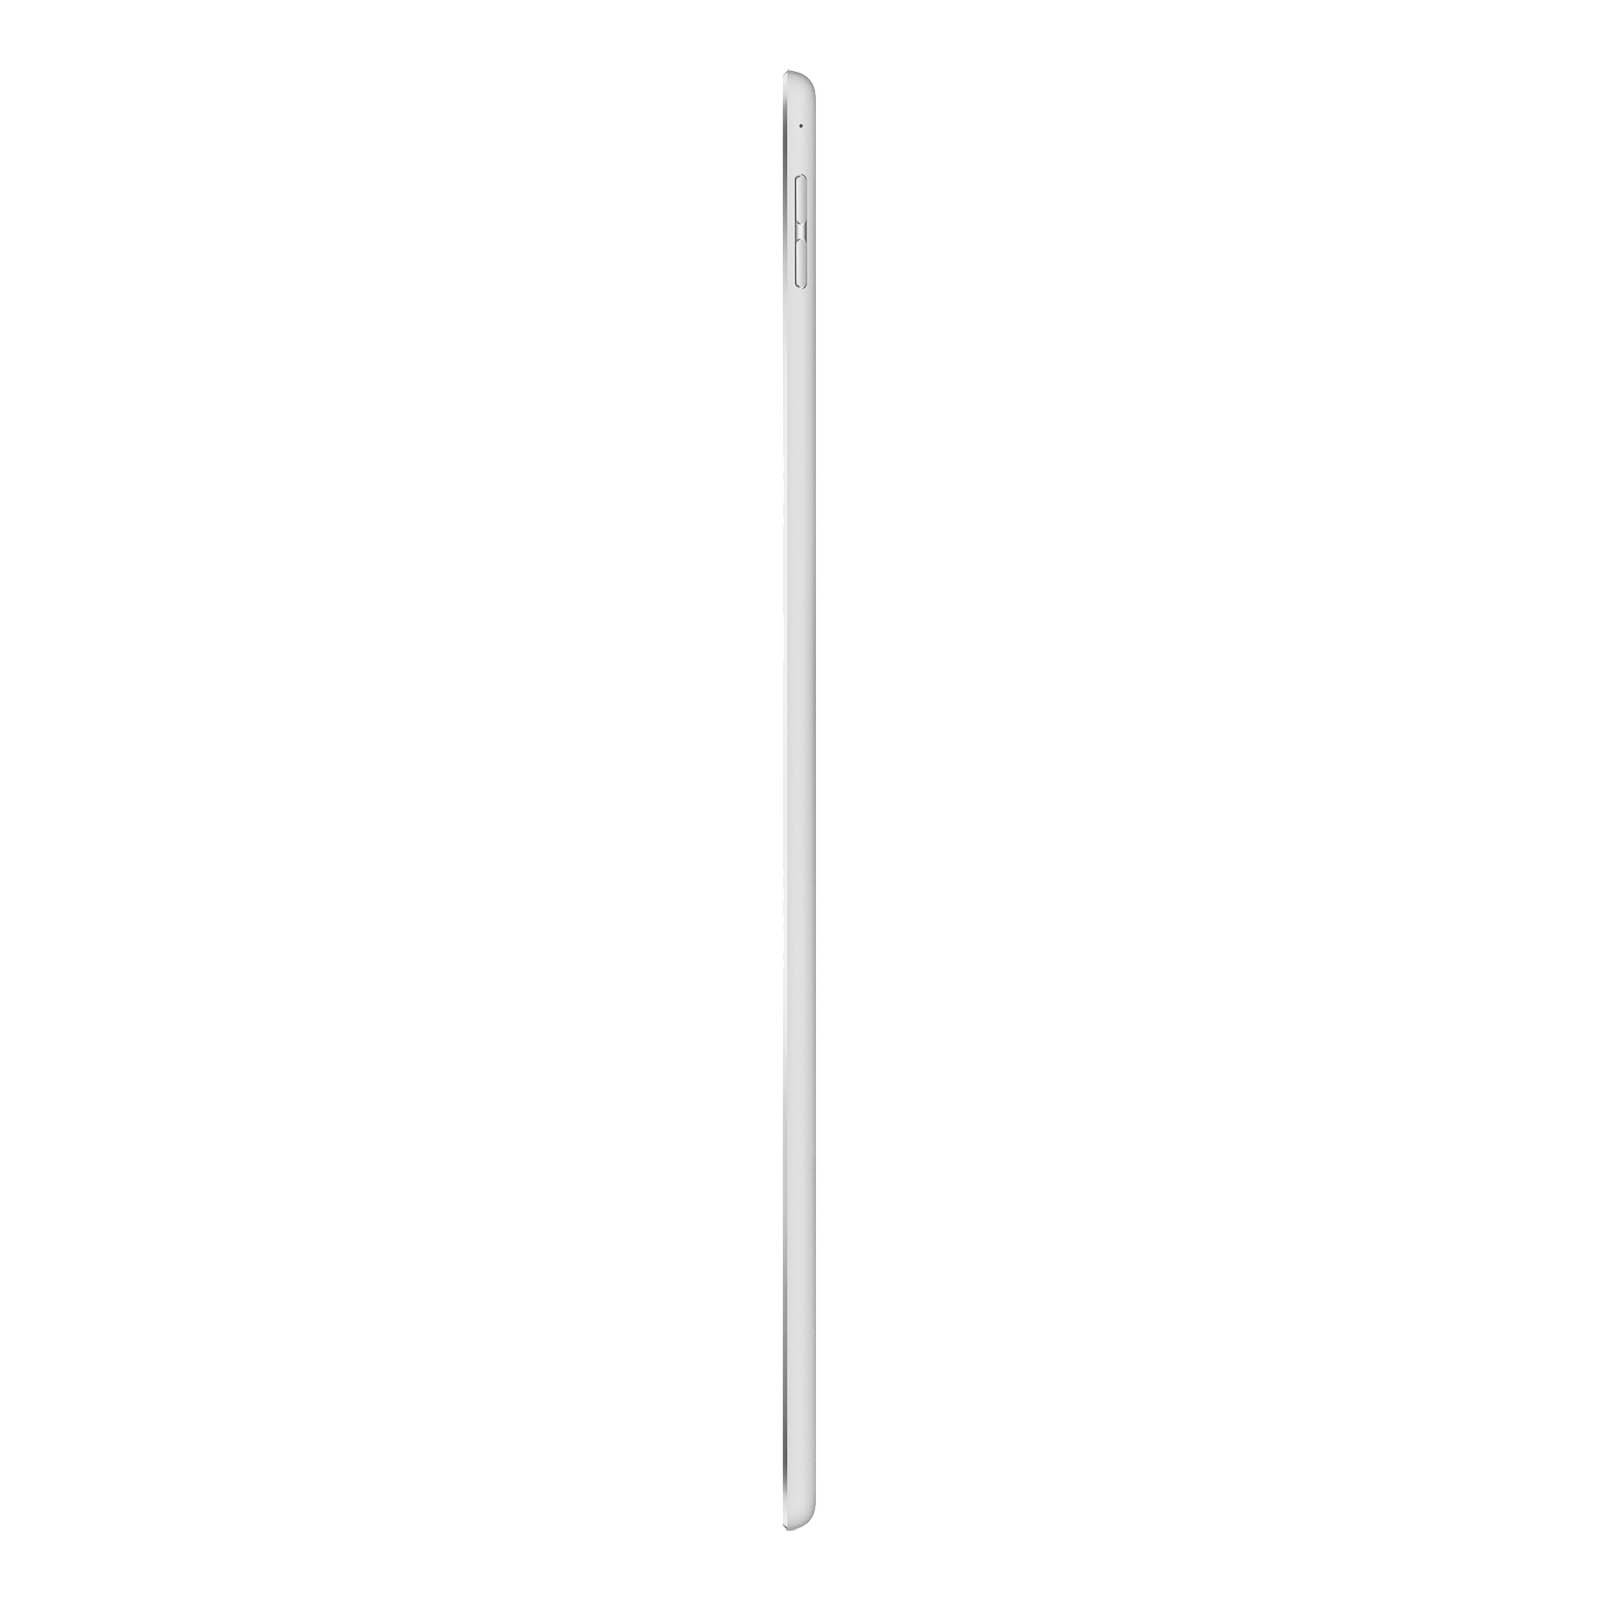 iPad Pro 12.9 Inch 1st Gen 32GB Silver Very Good - Unlocked